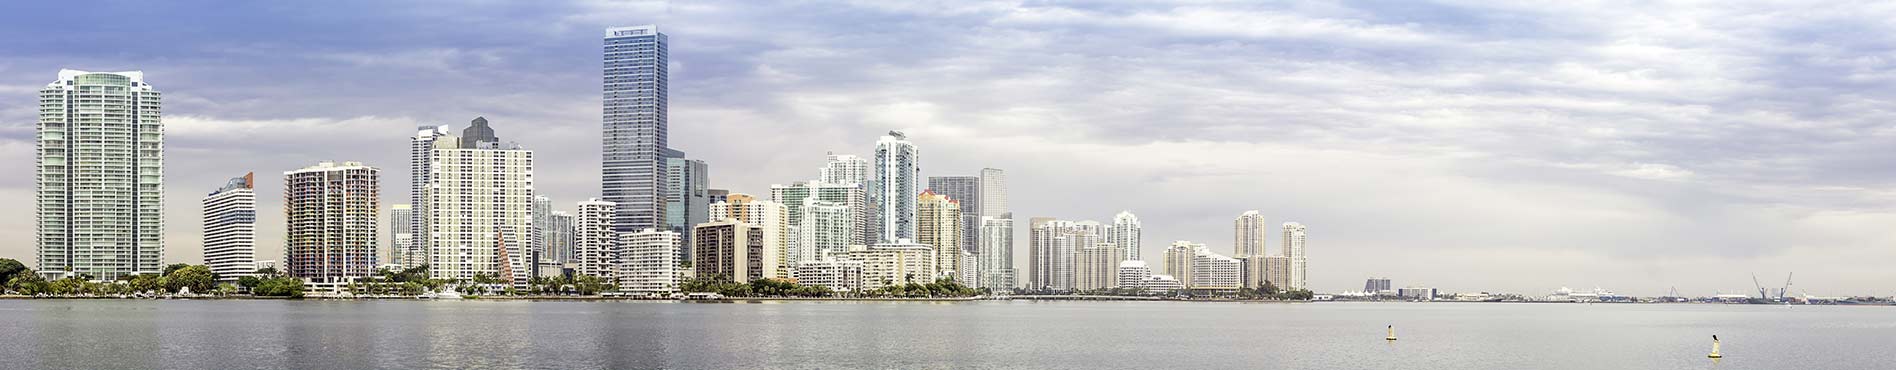 Florida Real Estate Law - Miami - Fort Lauderdale - Boca Raton - West Palm Beach